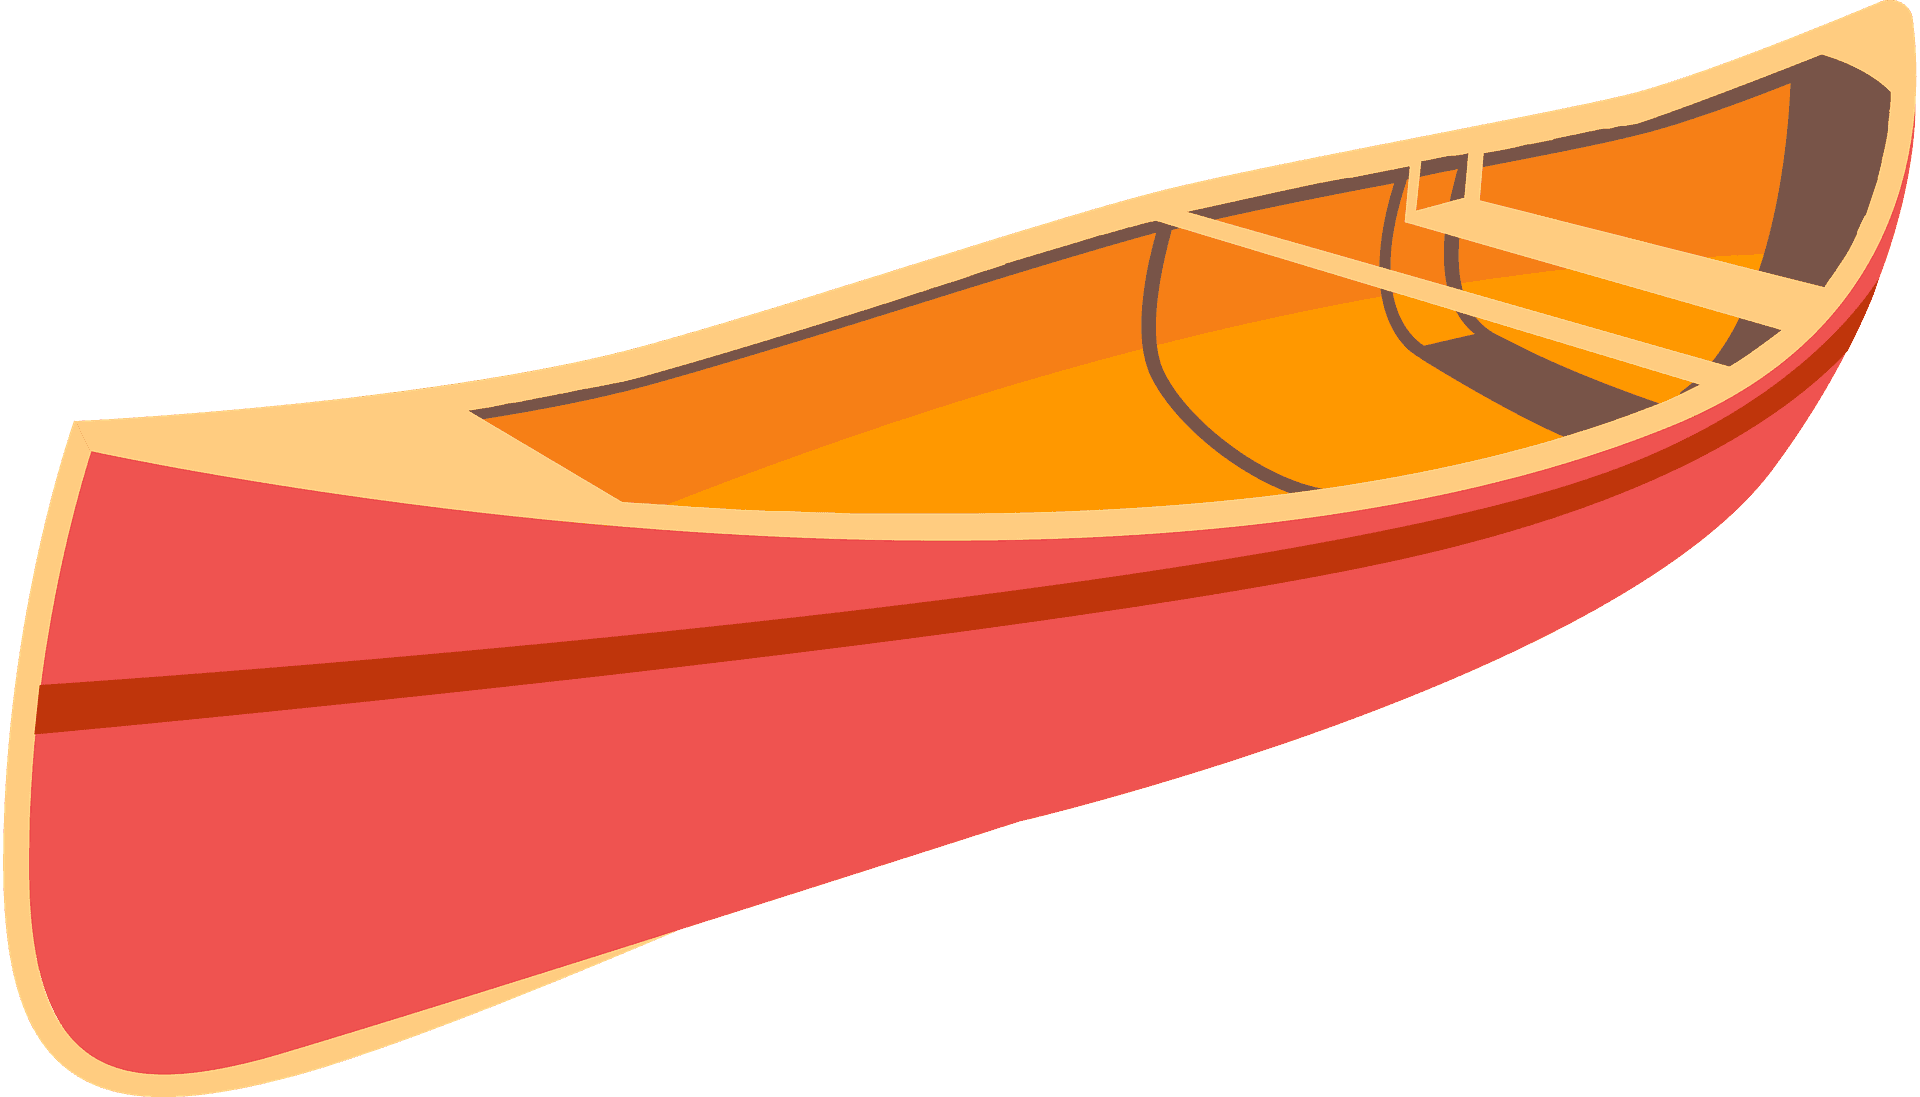 Red Canoe Illustration PNG image